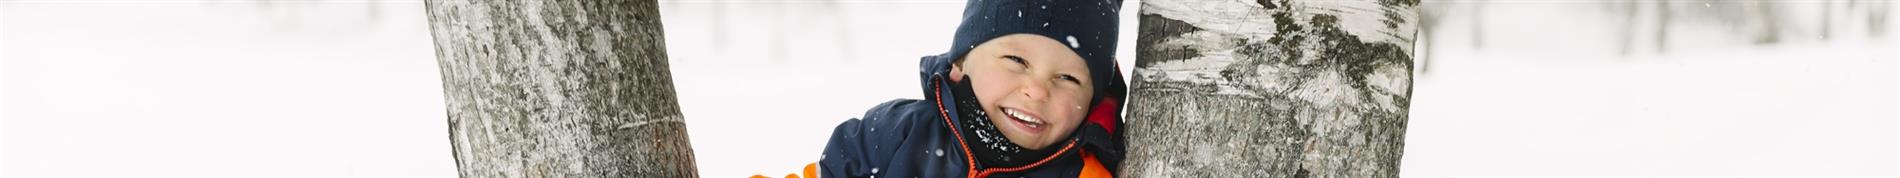 Columbia Boys’ Snowboard Coats Keeping Kids Warm on the Mountain Slopes 